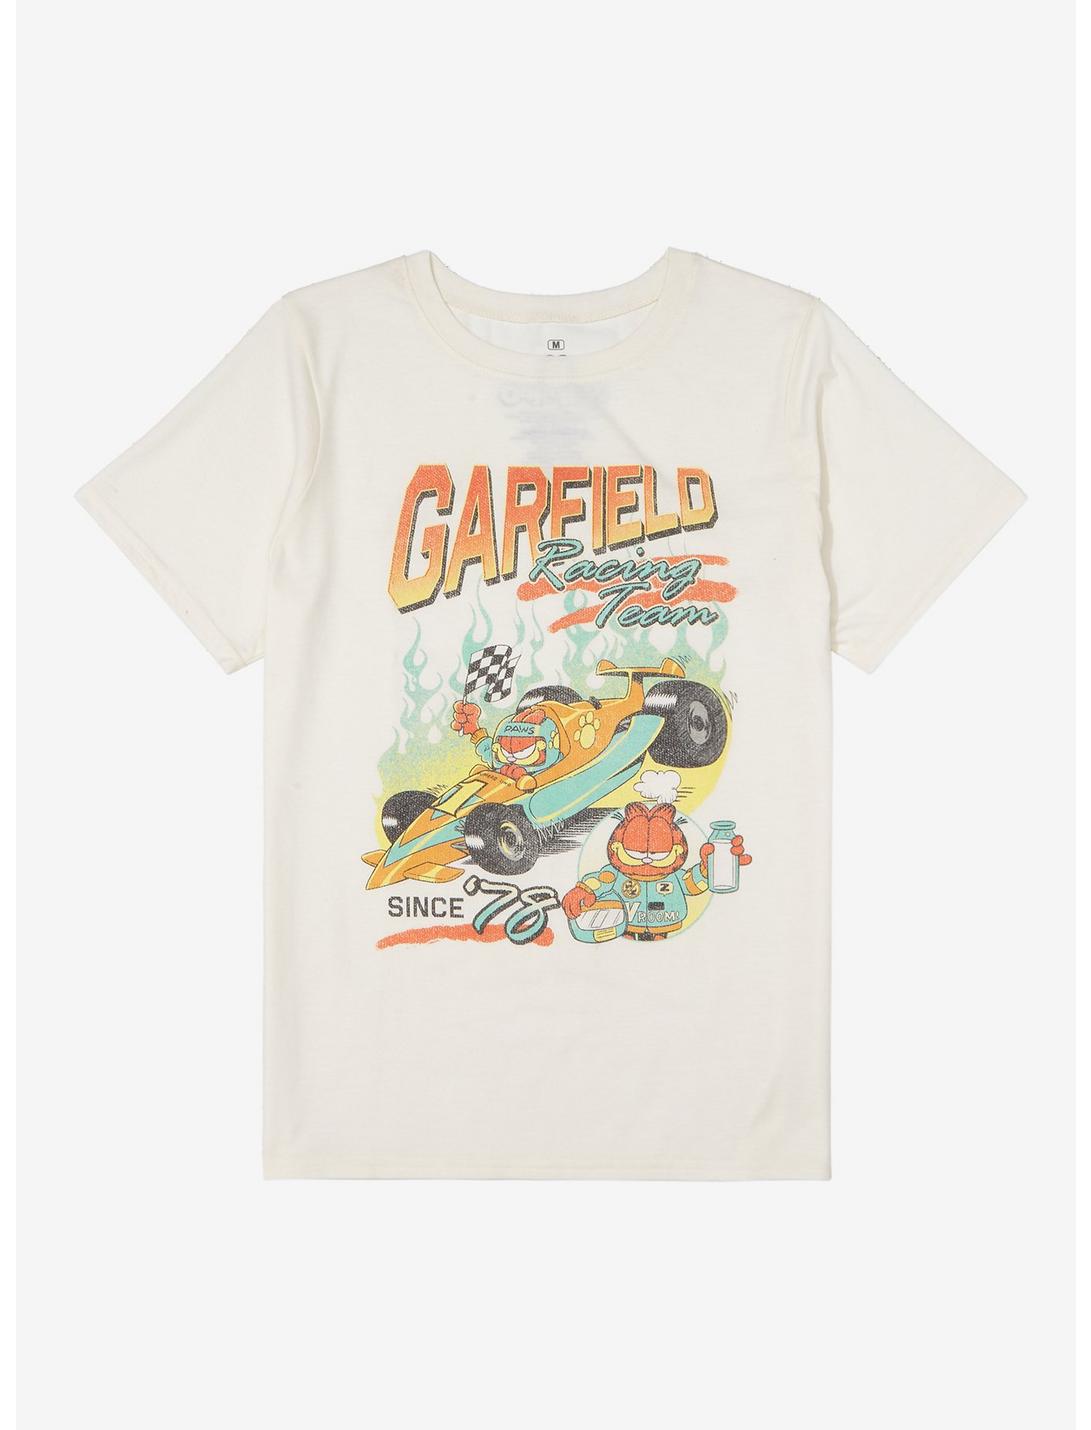 Garfield Racing Team Boyfriend Fit Girls T-Shirt, MULTI, hi-res